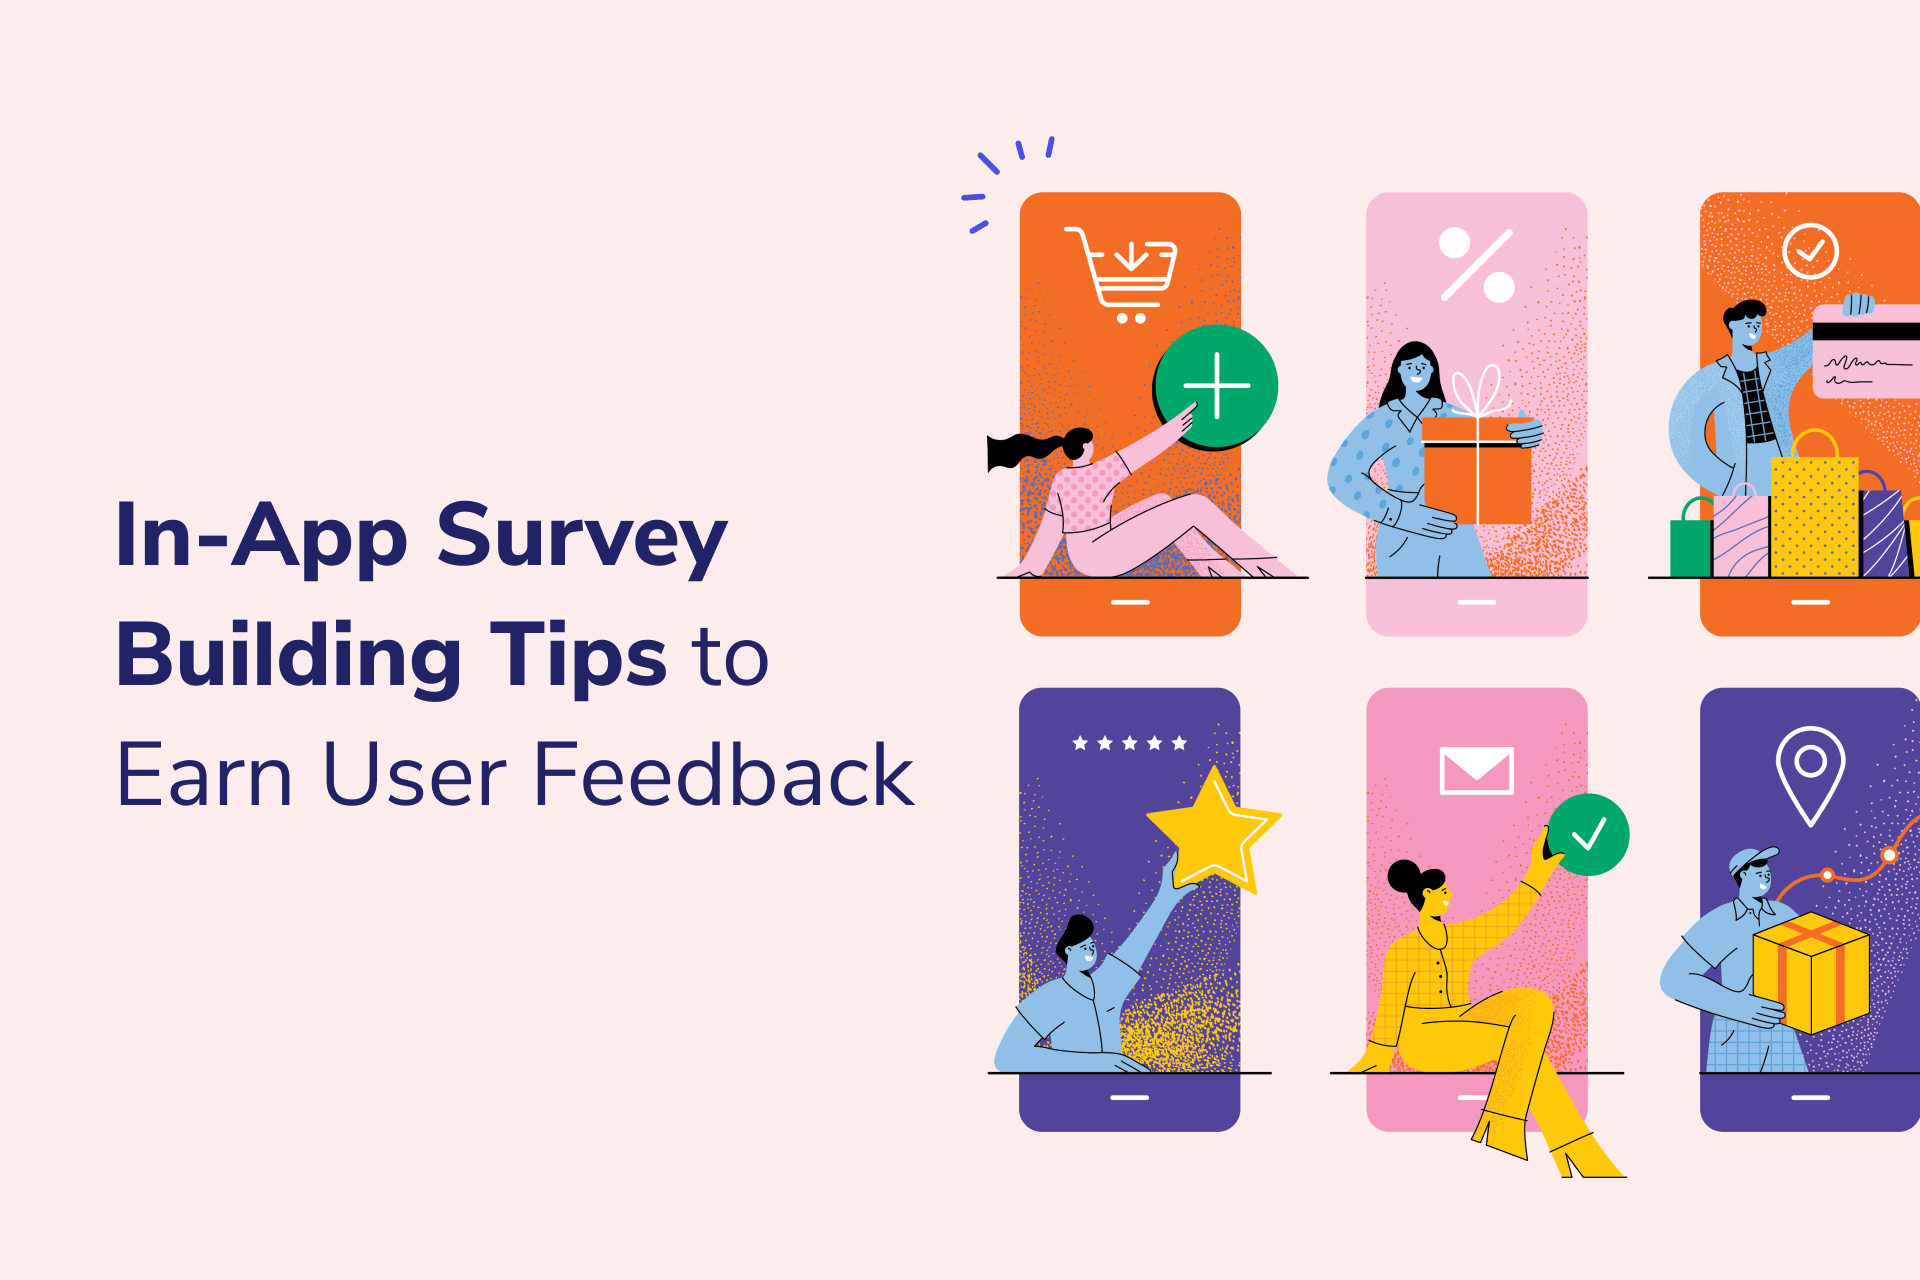 In-App Survey Building Tips to Earn User Feedback